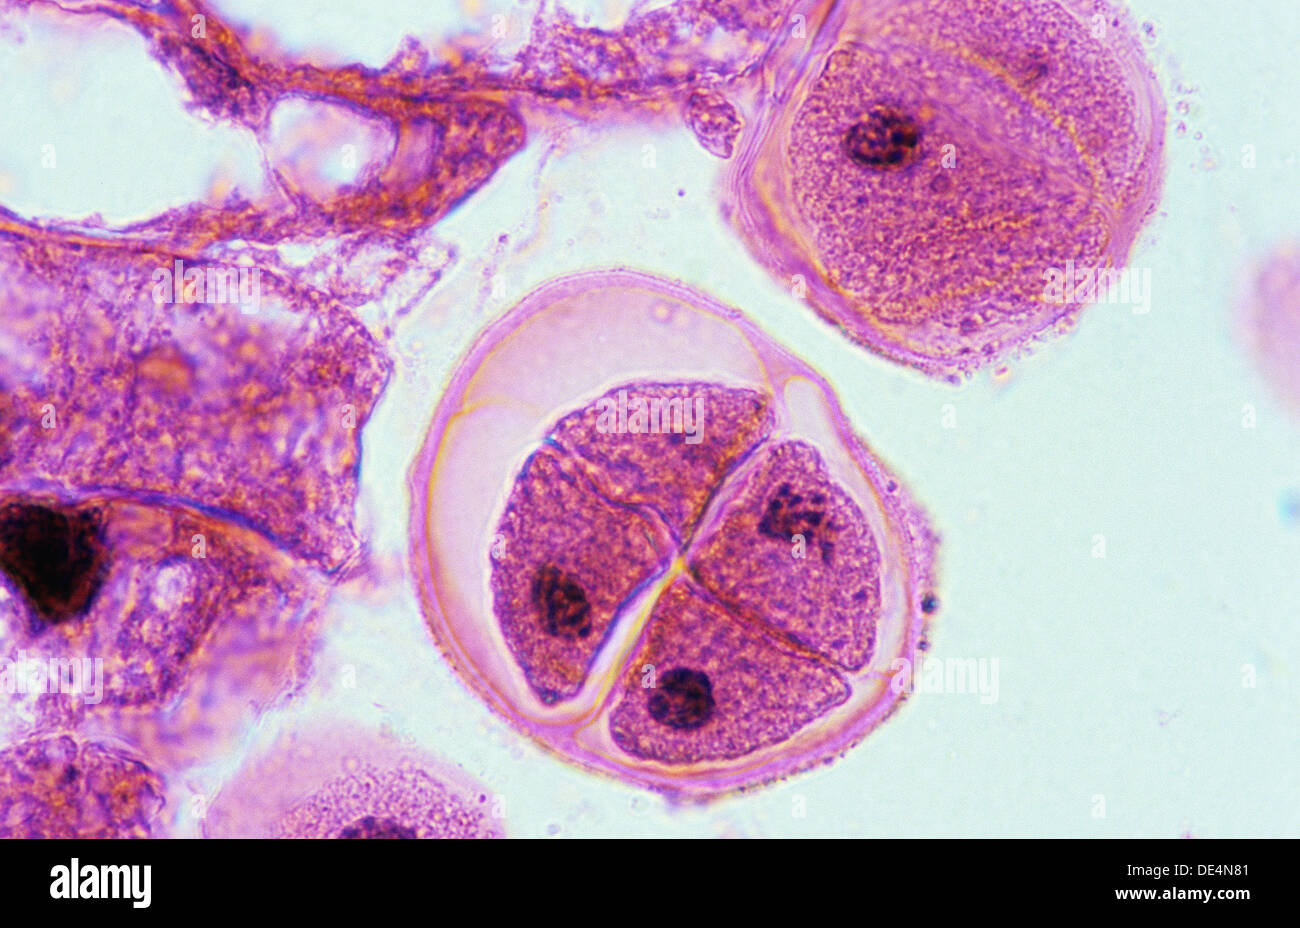 (http://c8.alamy.com/comp/DE4N81/meiosis-in-lilium-anther-telophase-ii-1000-x-optical-microscope-photomicrography-DE4N81.jpg)